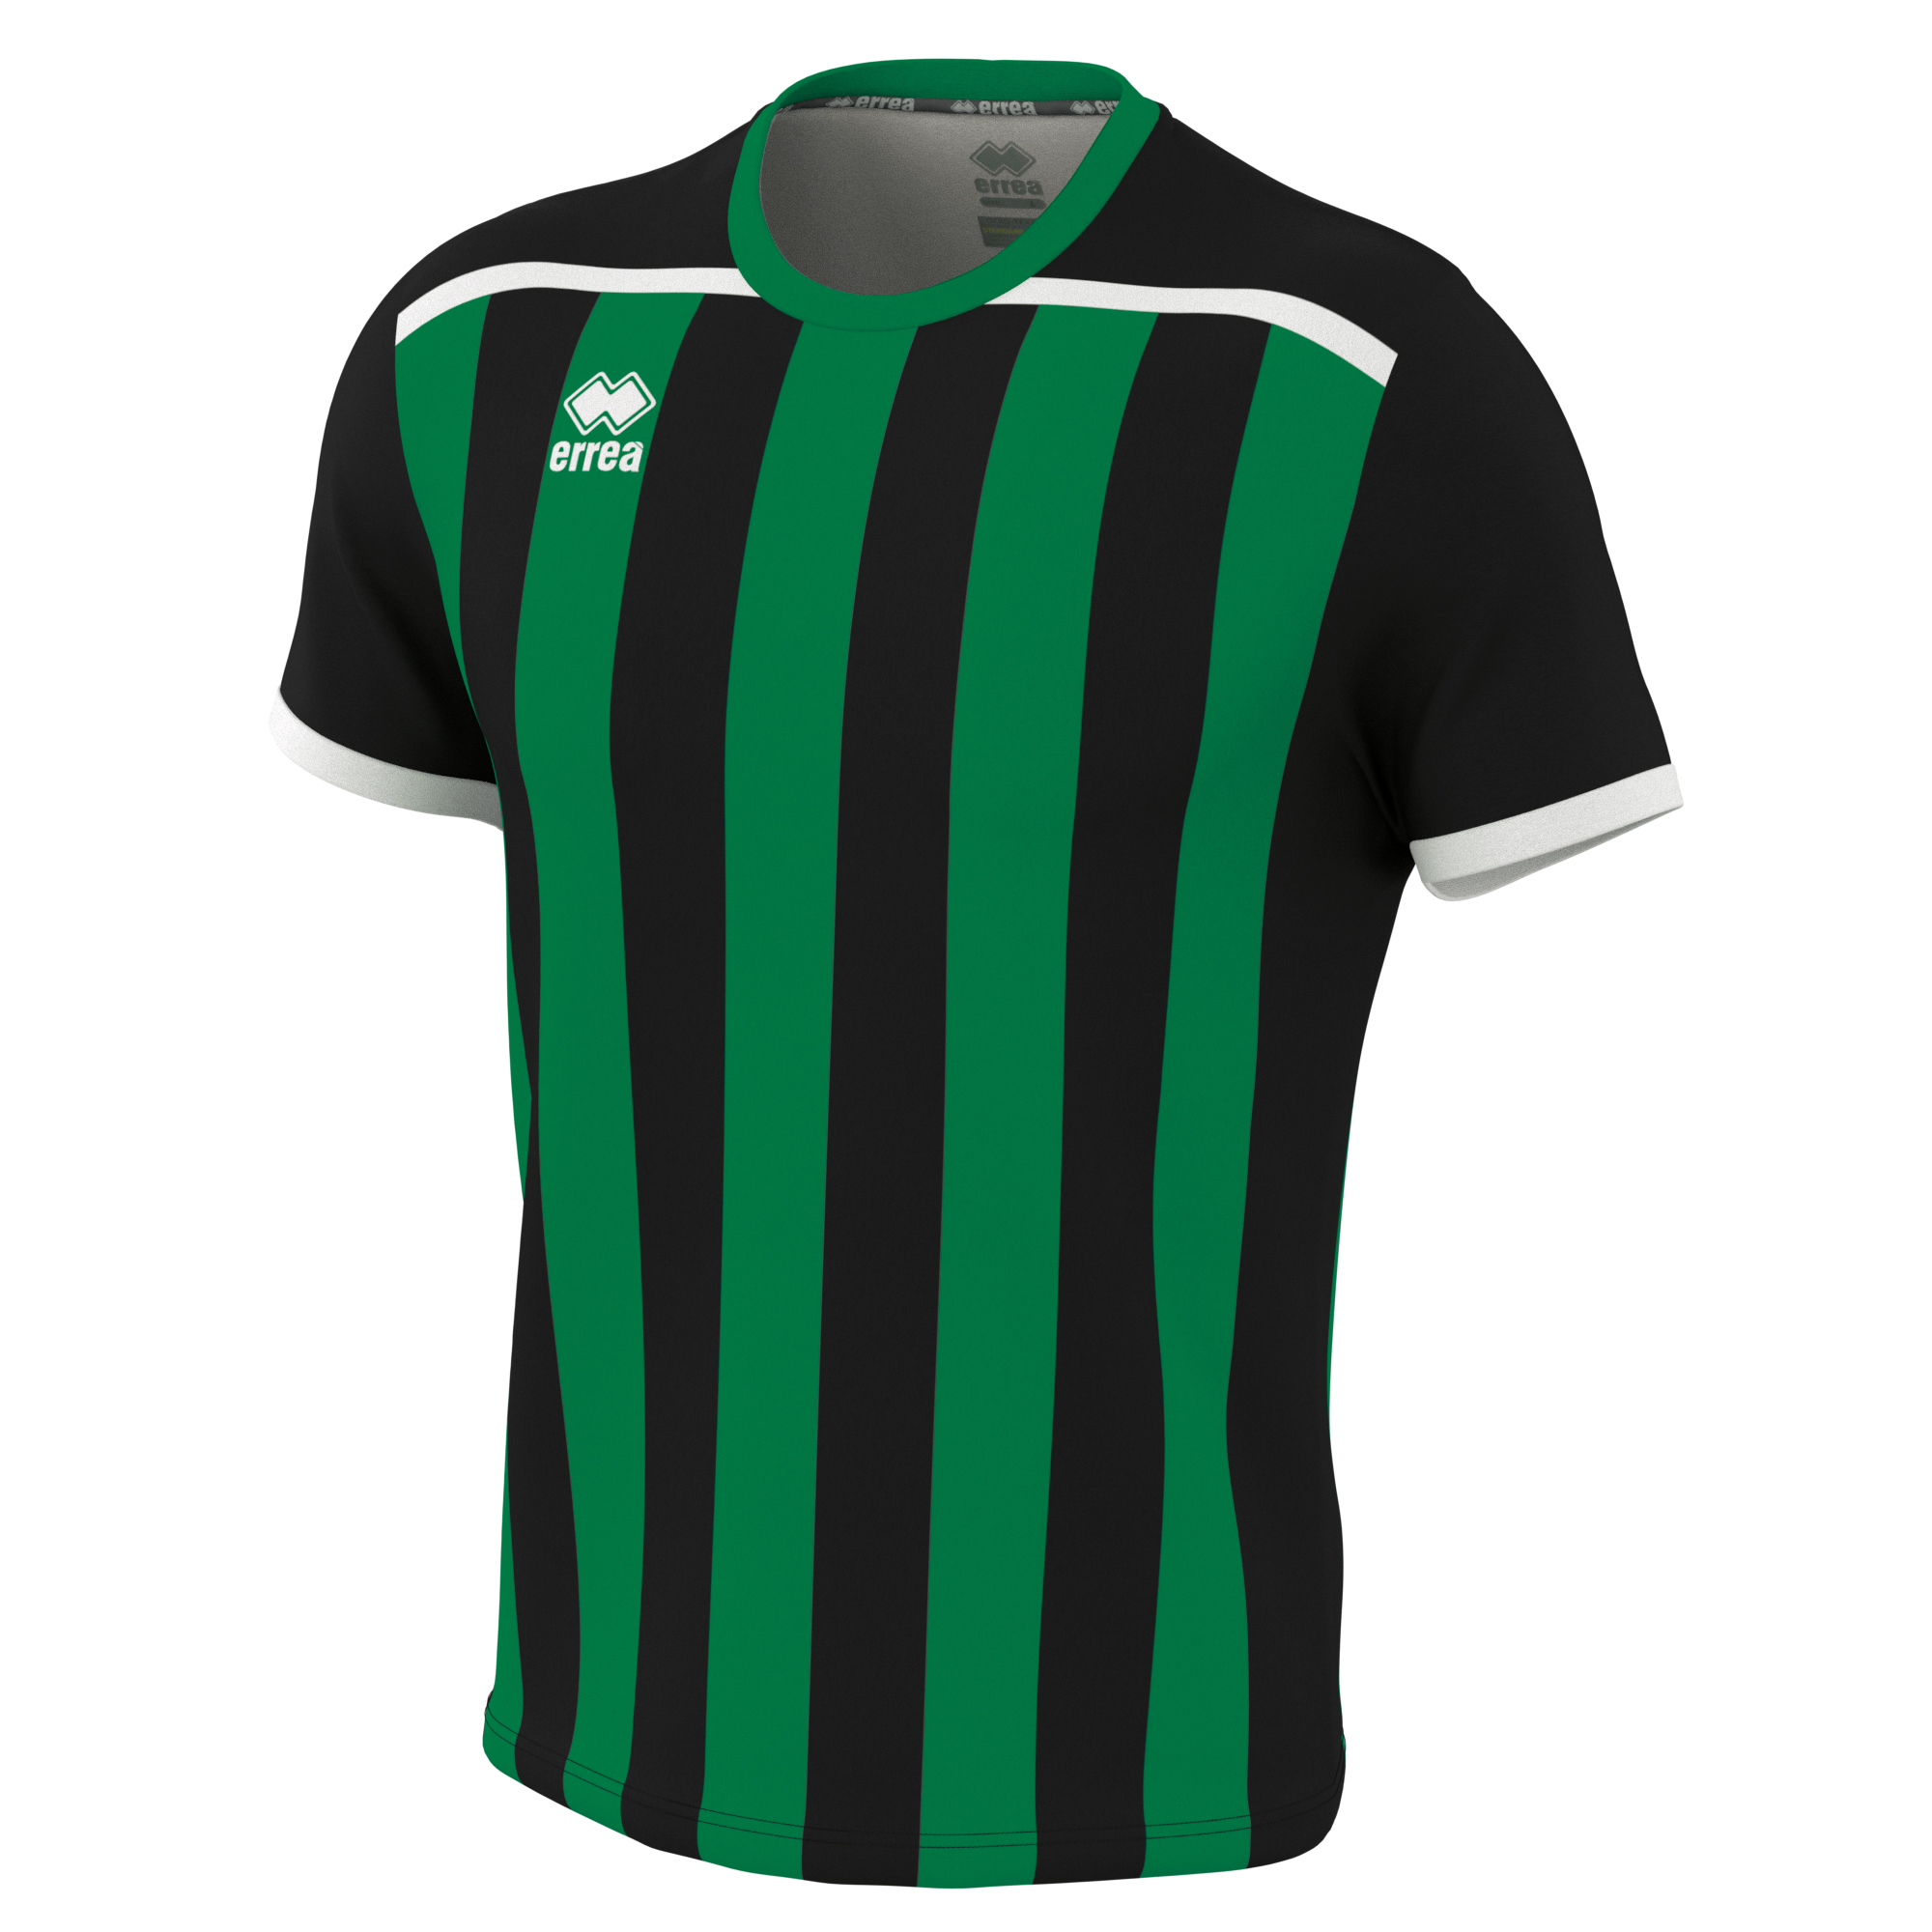 ERREA dres ELLIOT BARVA: zelená - černá, Velikost: XL